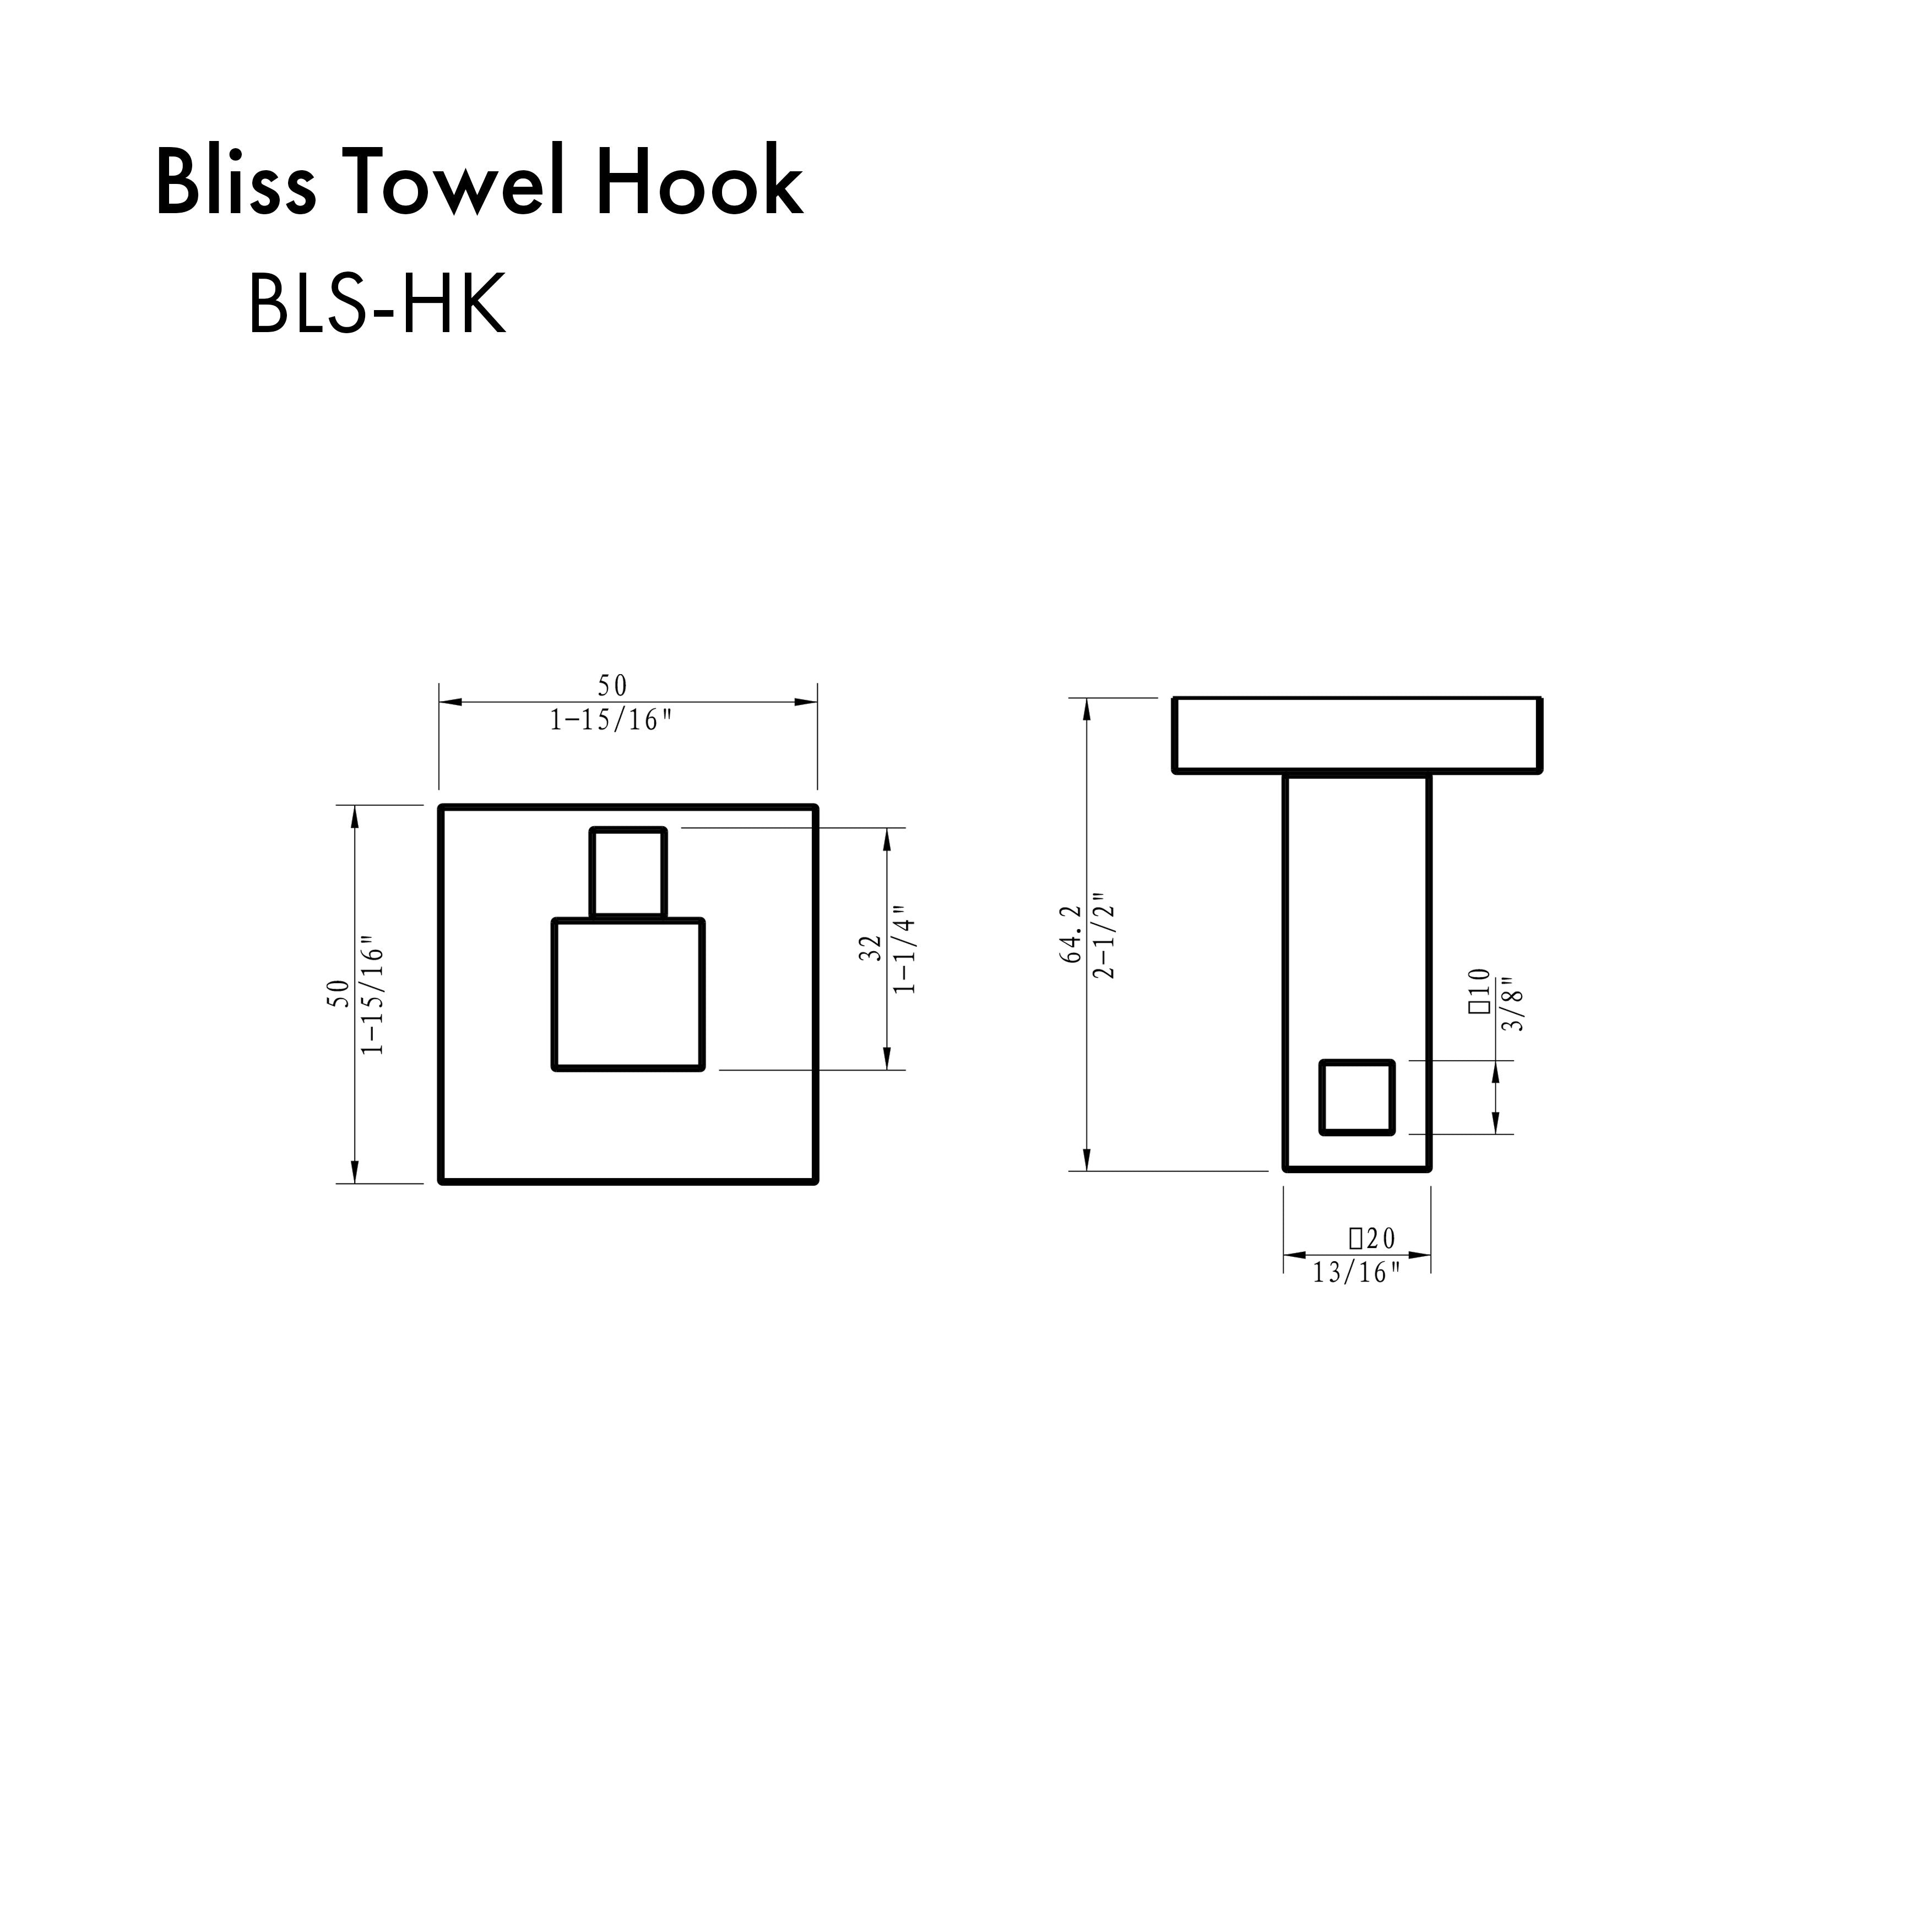 Therangehoodstore.com, ZLINE Bliss Towel Hook With Color Options, BLS-HK-BN,